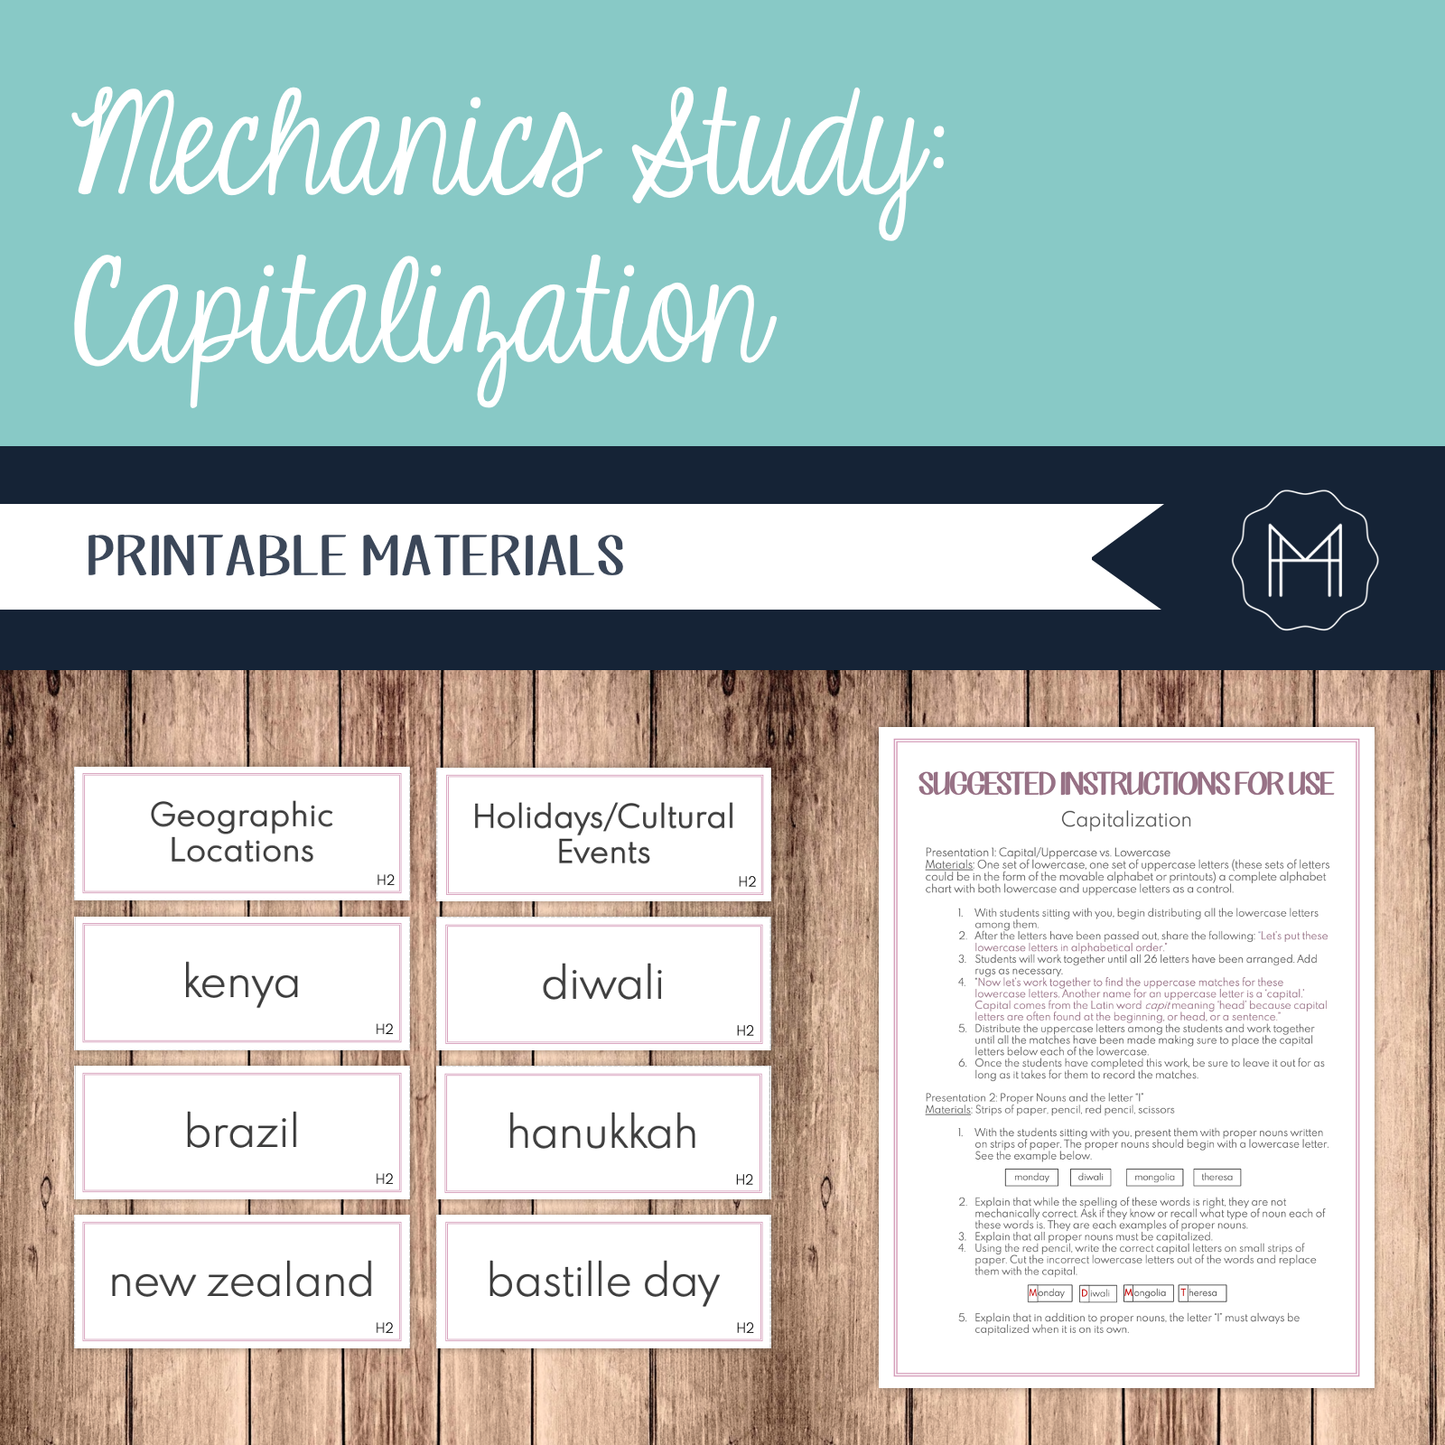 Mechanics Study: Capitalization